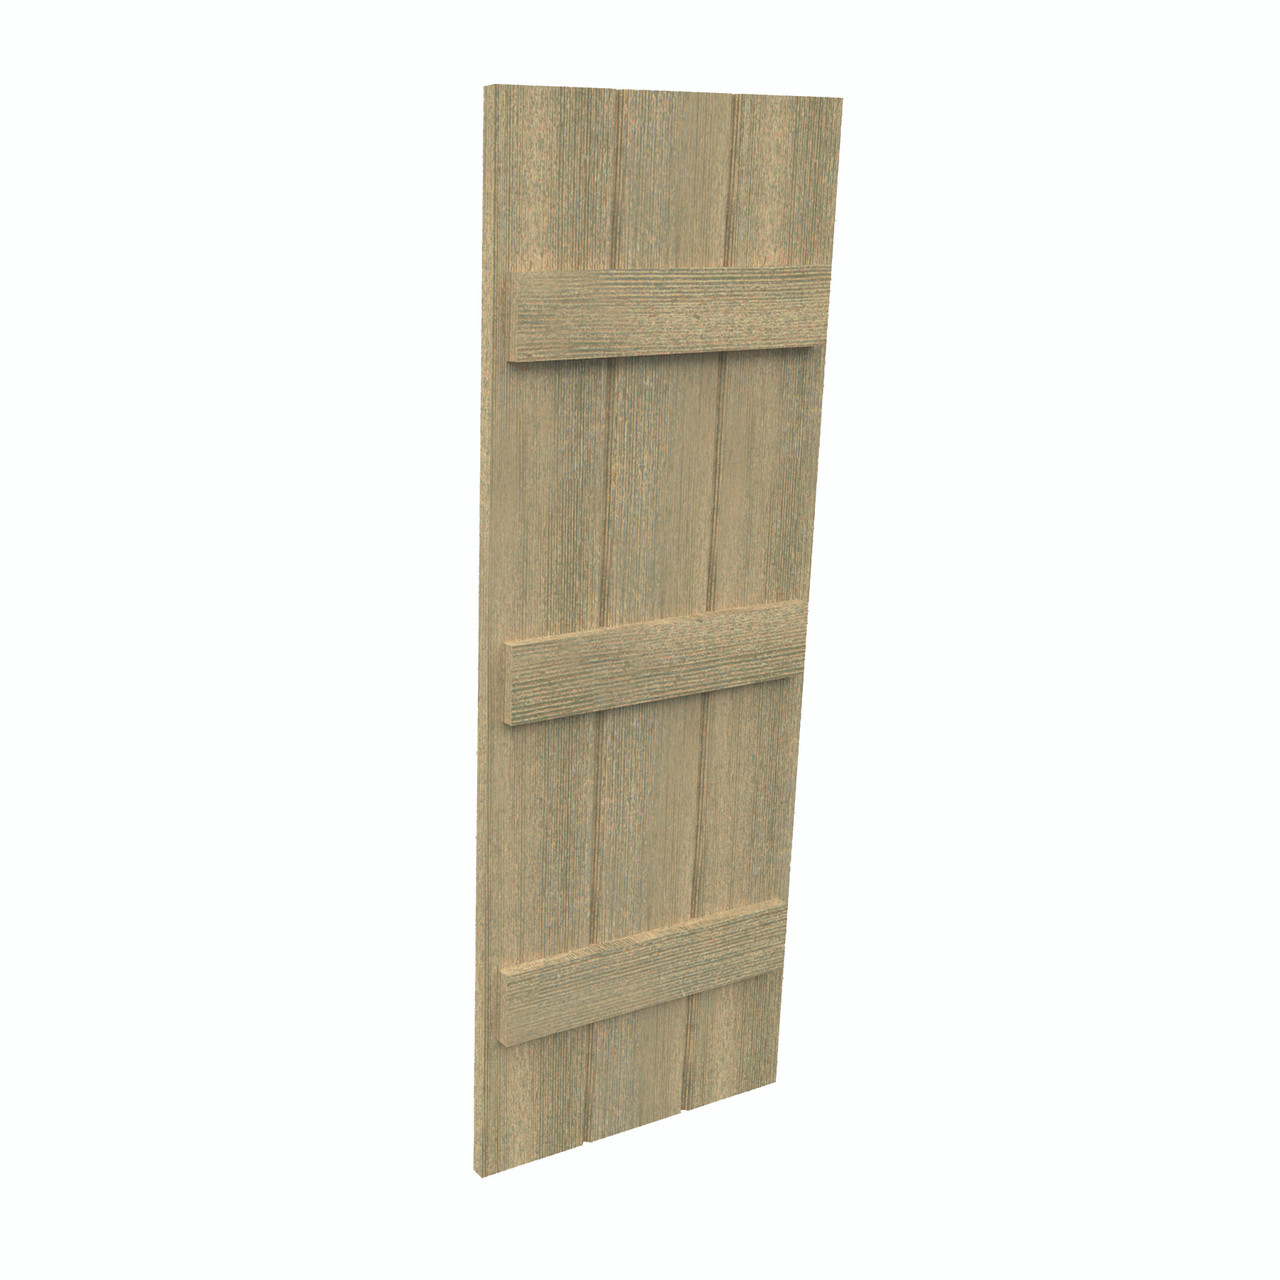 18 inch by 61 inch Plank Shutter with 3-Plank, 3-Batten